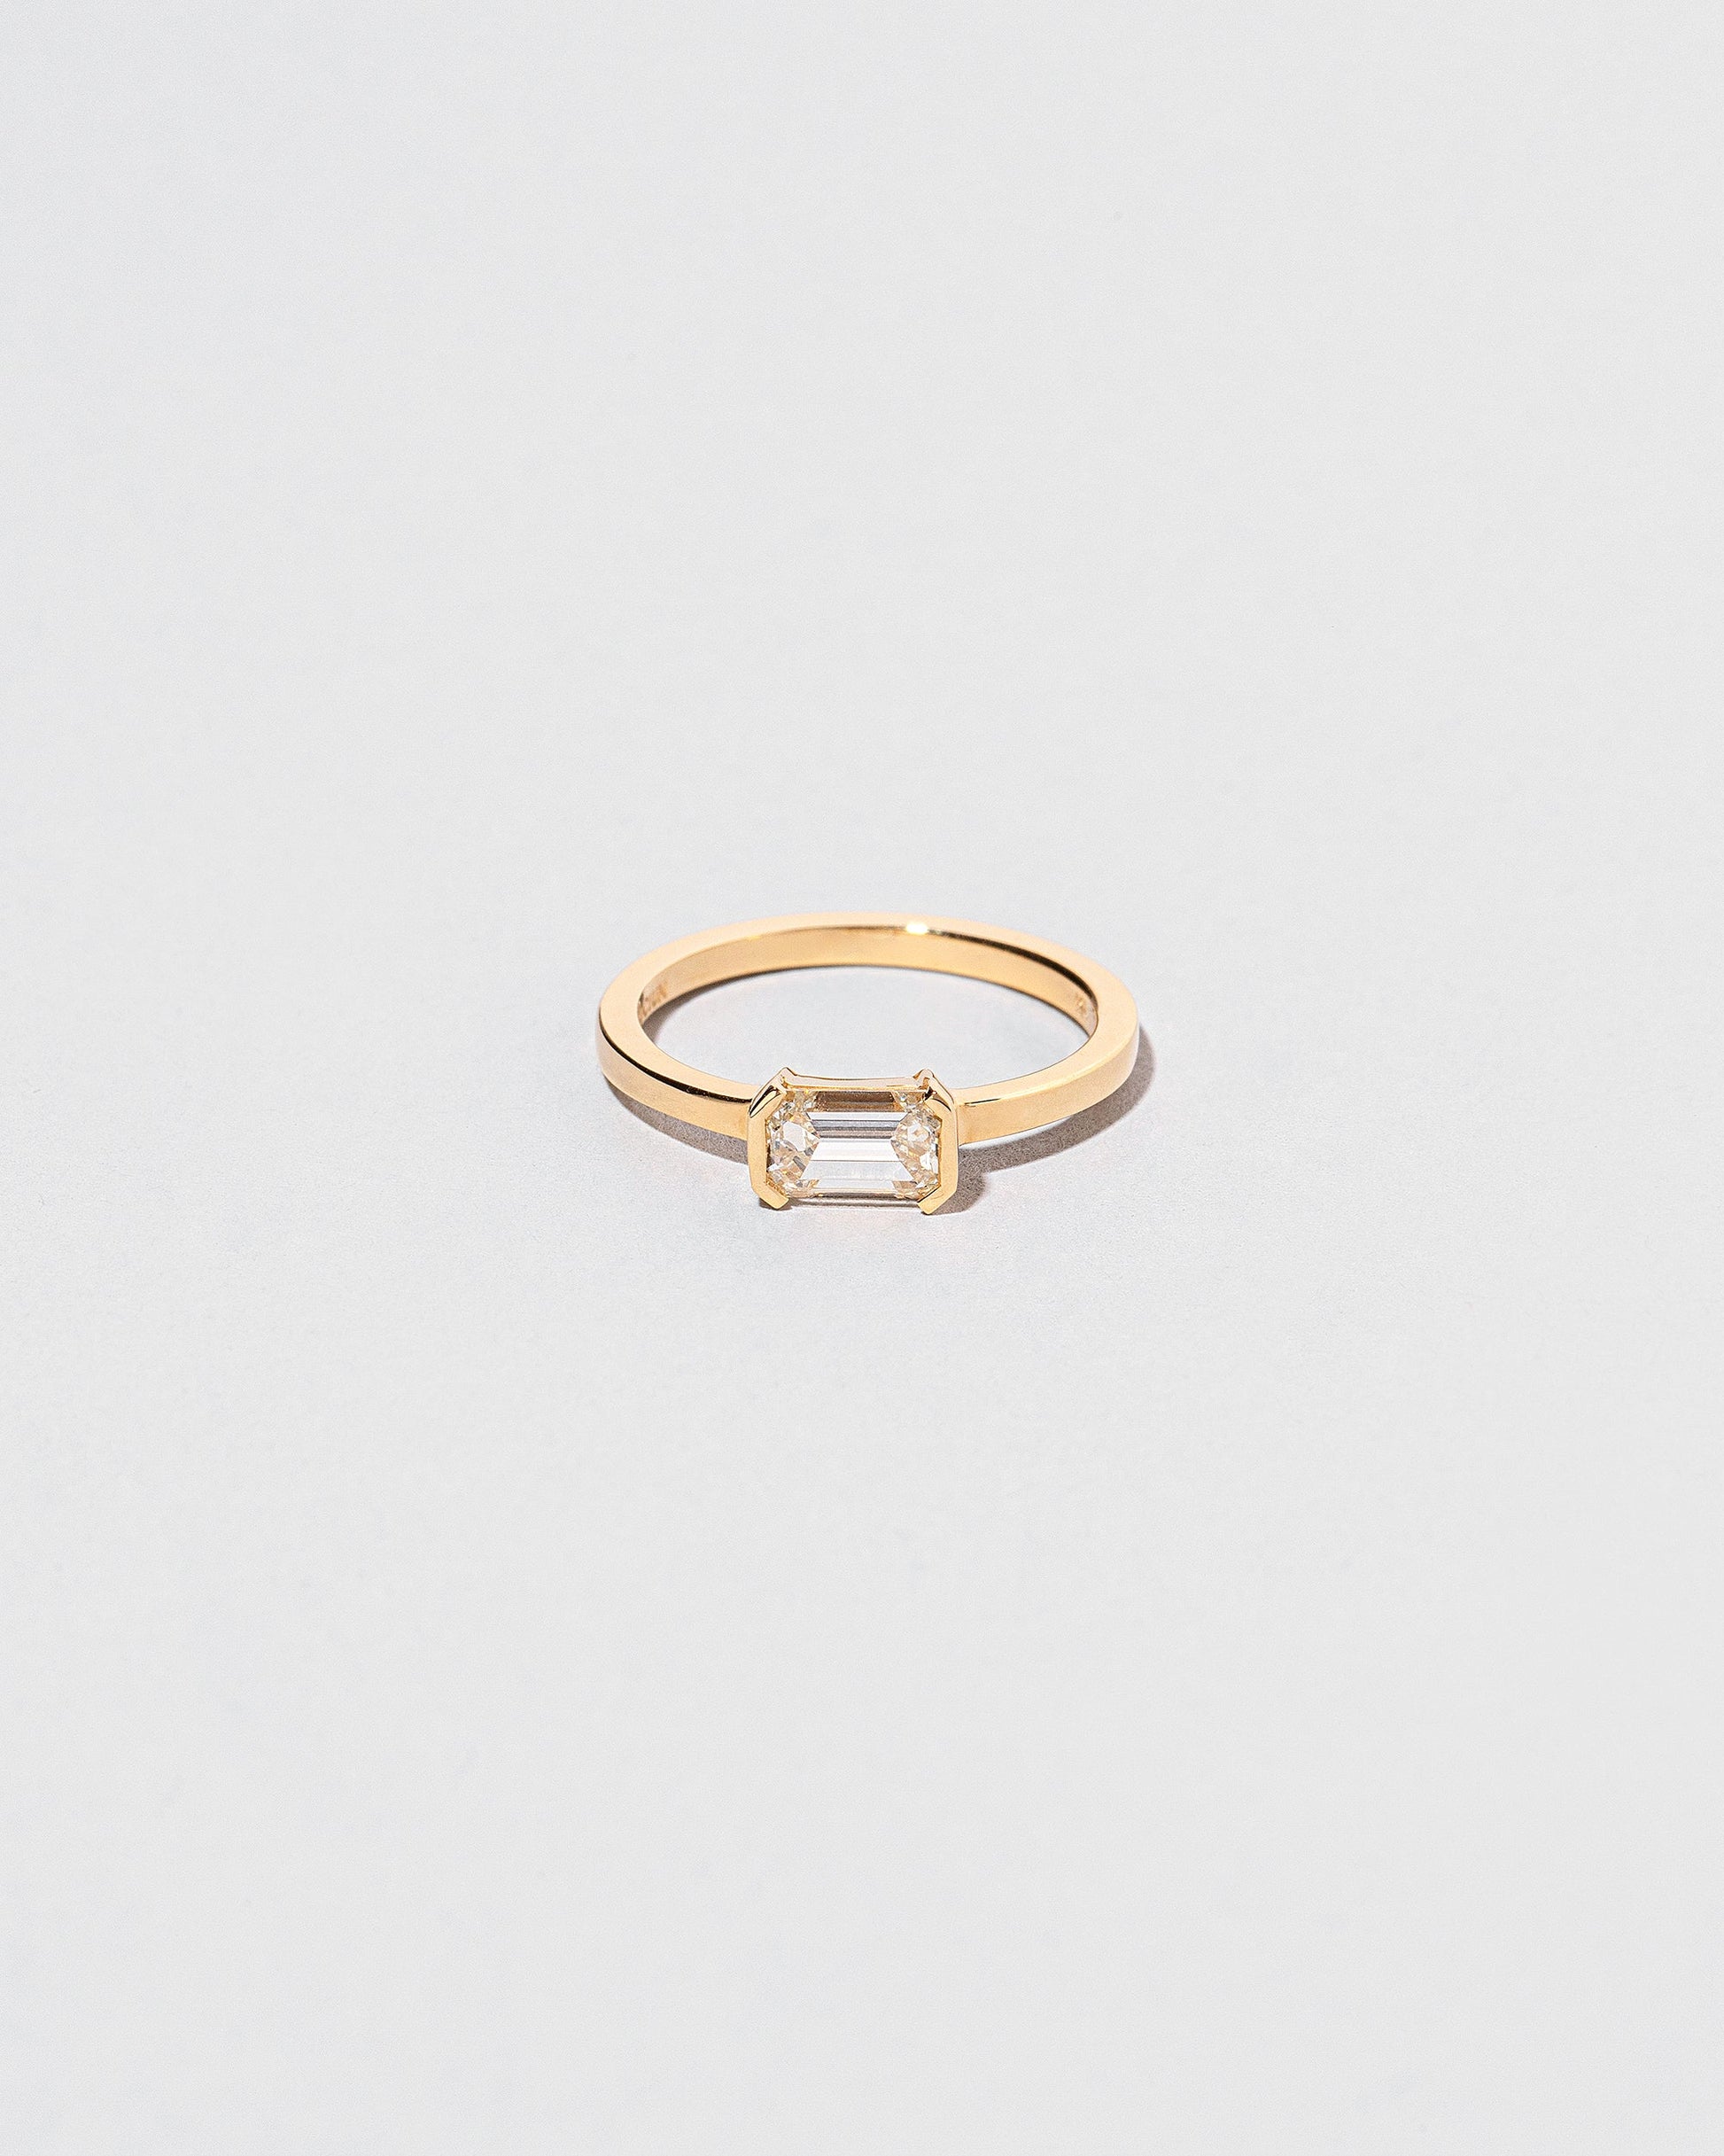  Simbelmyne Ring on light color background.